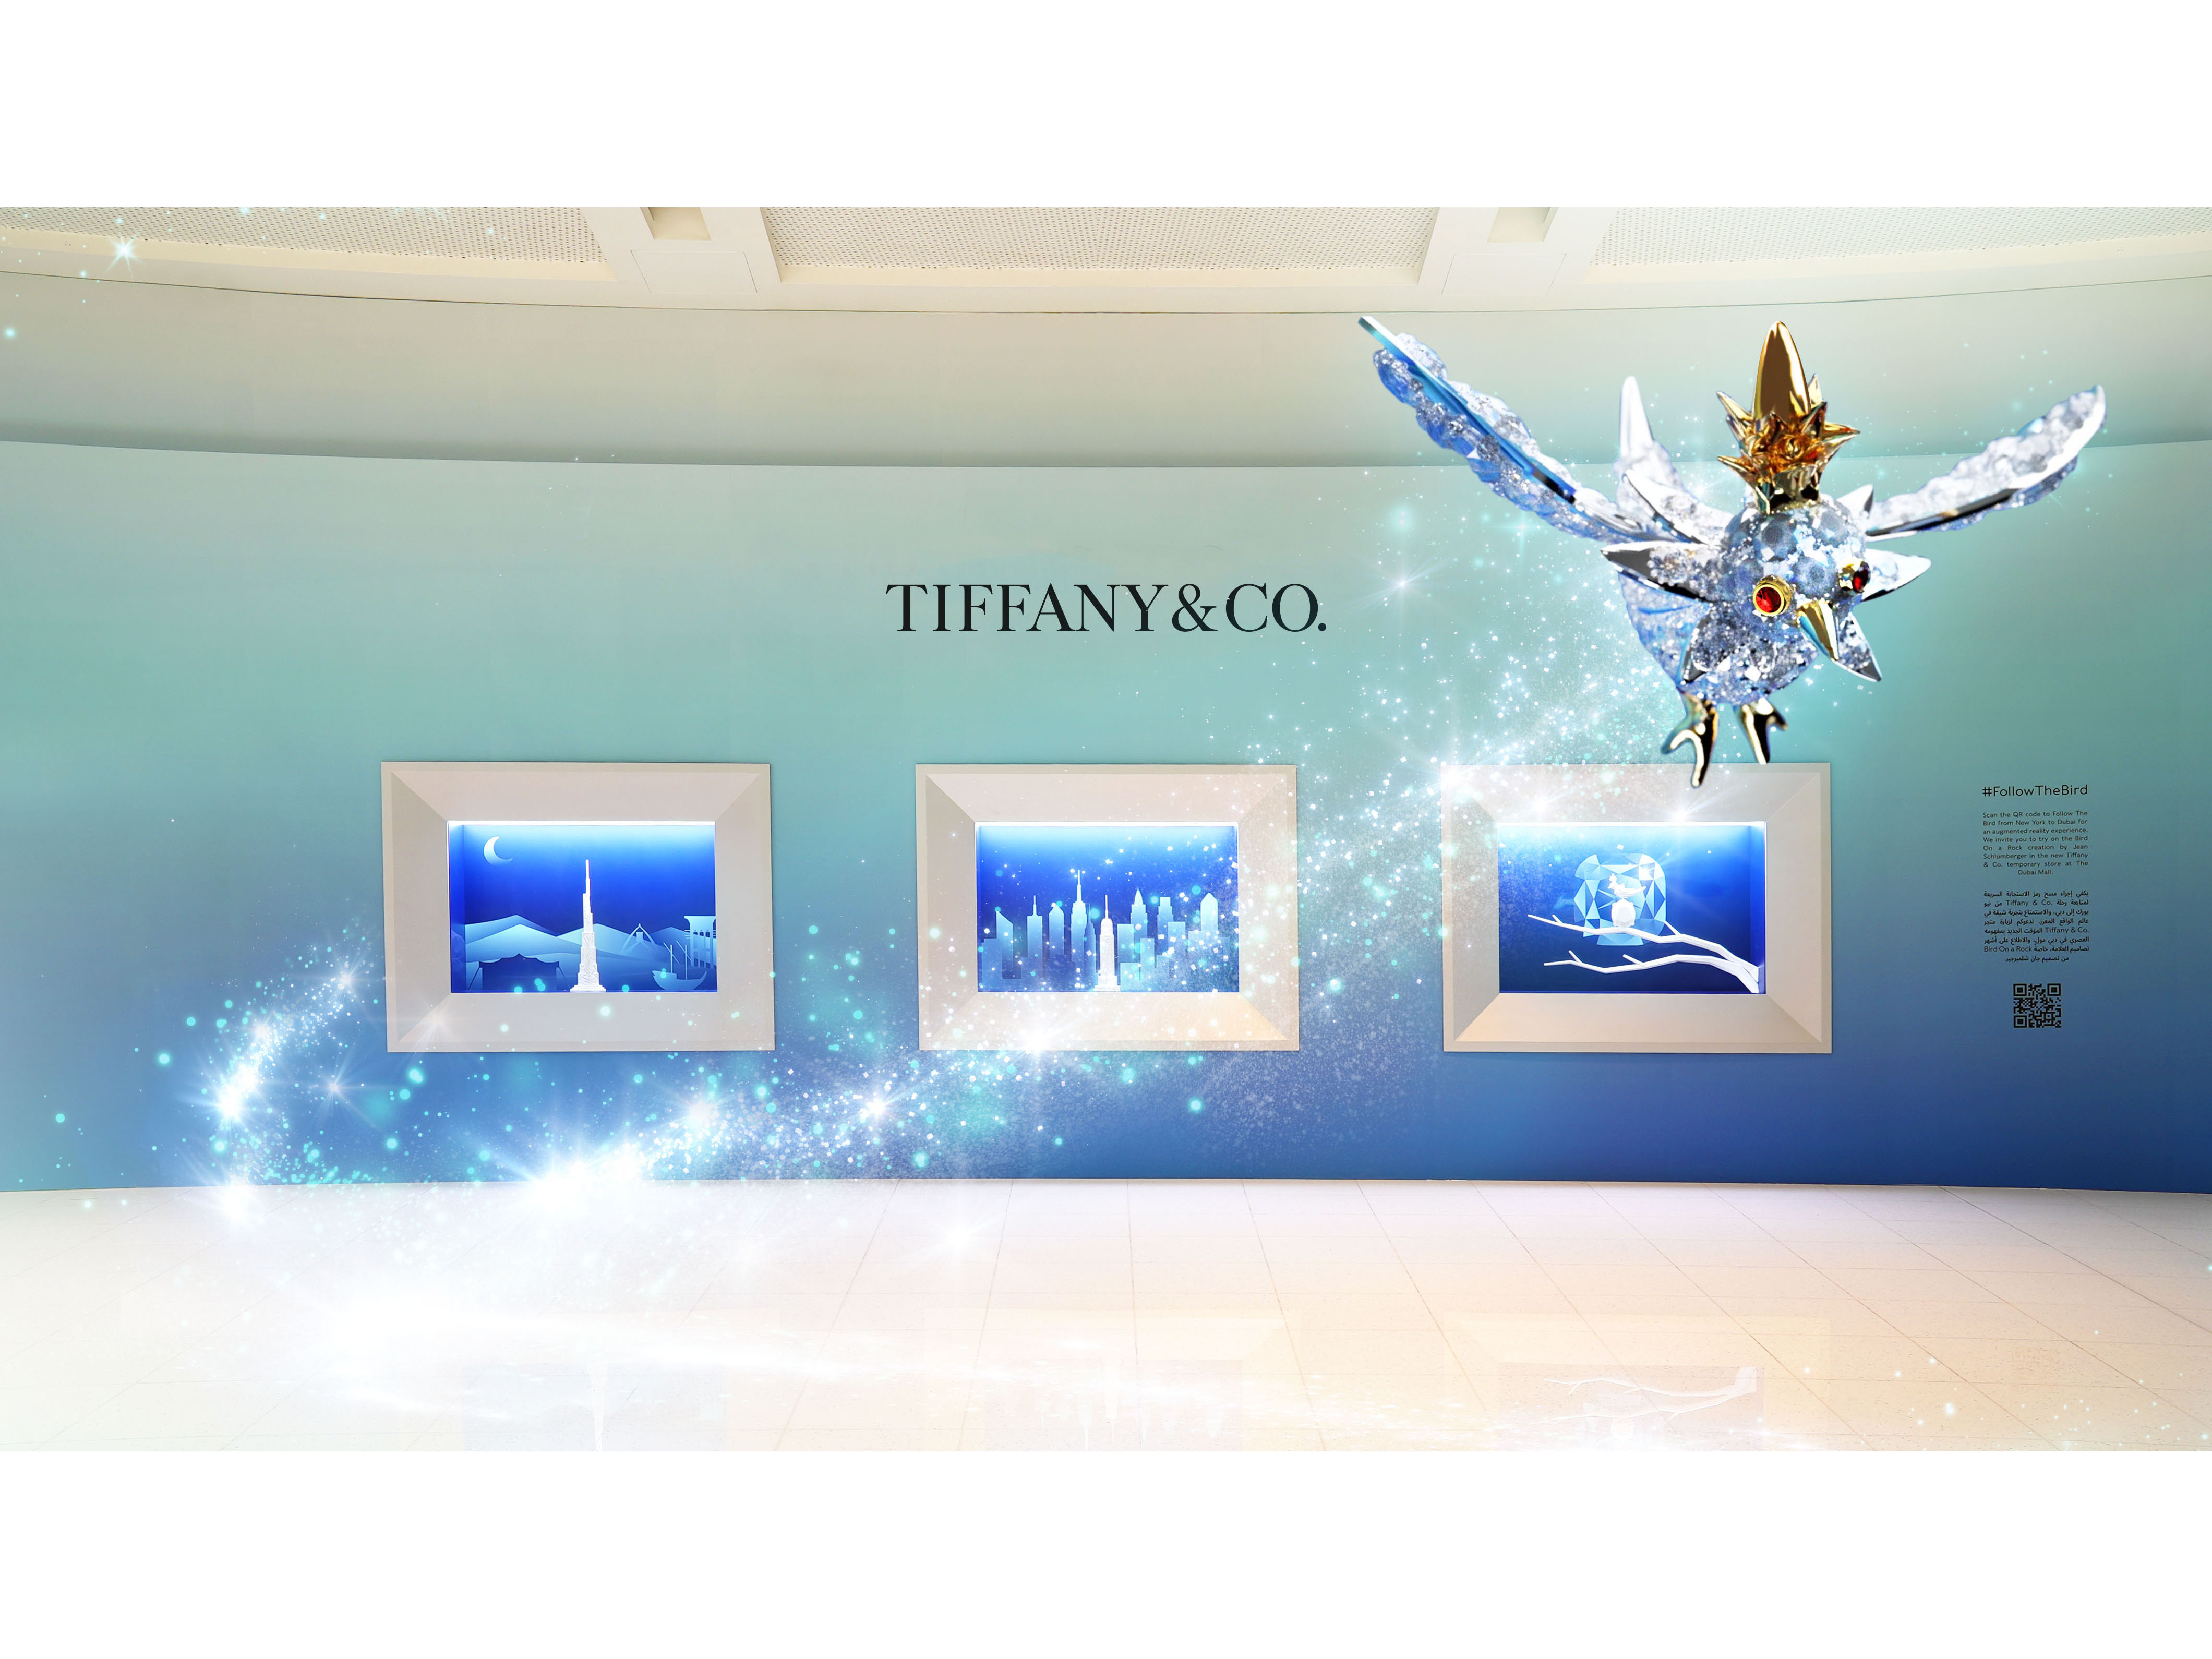 Tiffany & Co. introduces 'Follow the Bird', an AR experience like no other created by BUREAU BEATRICE  